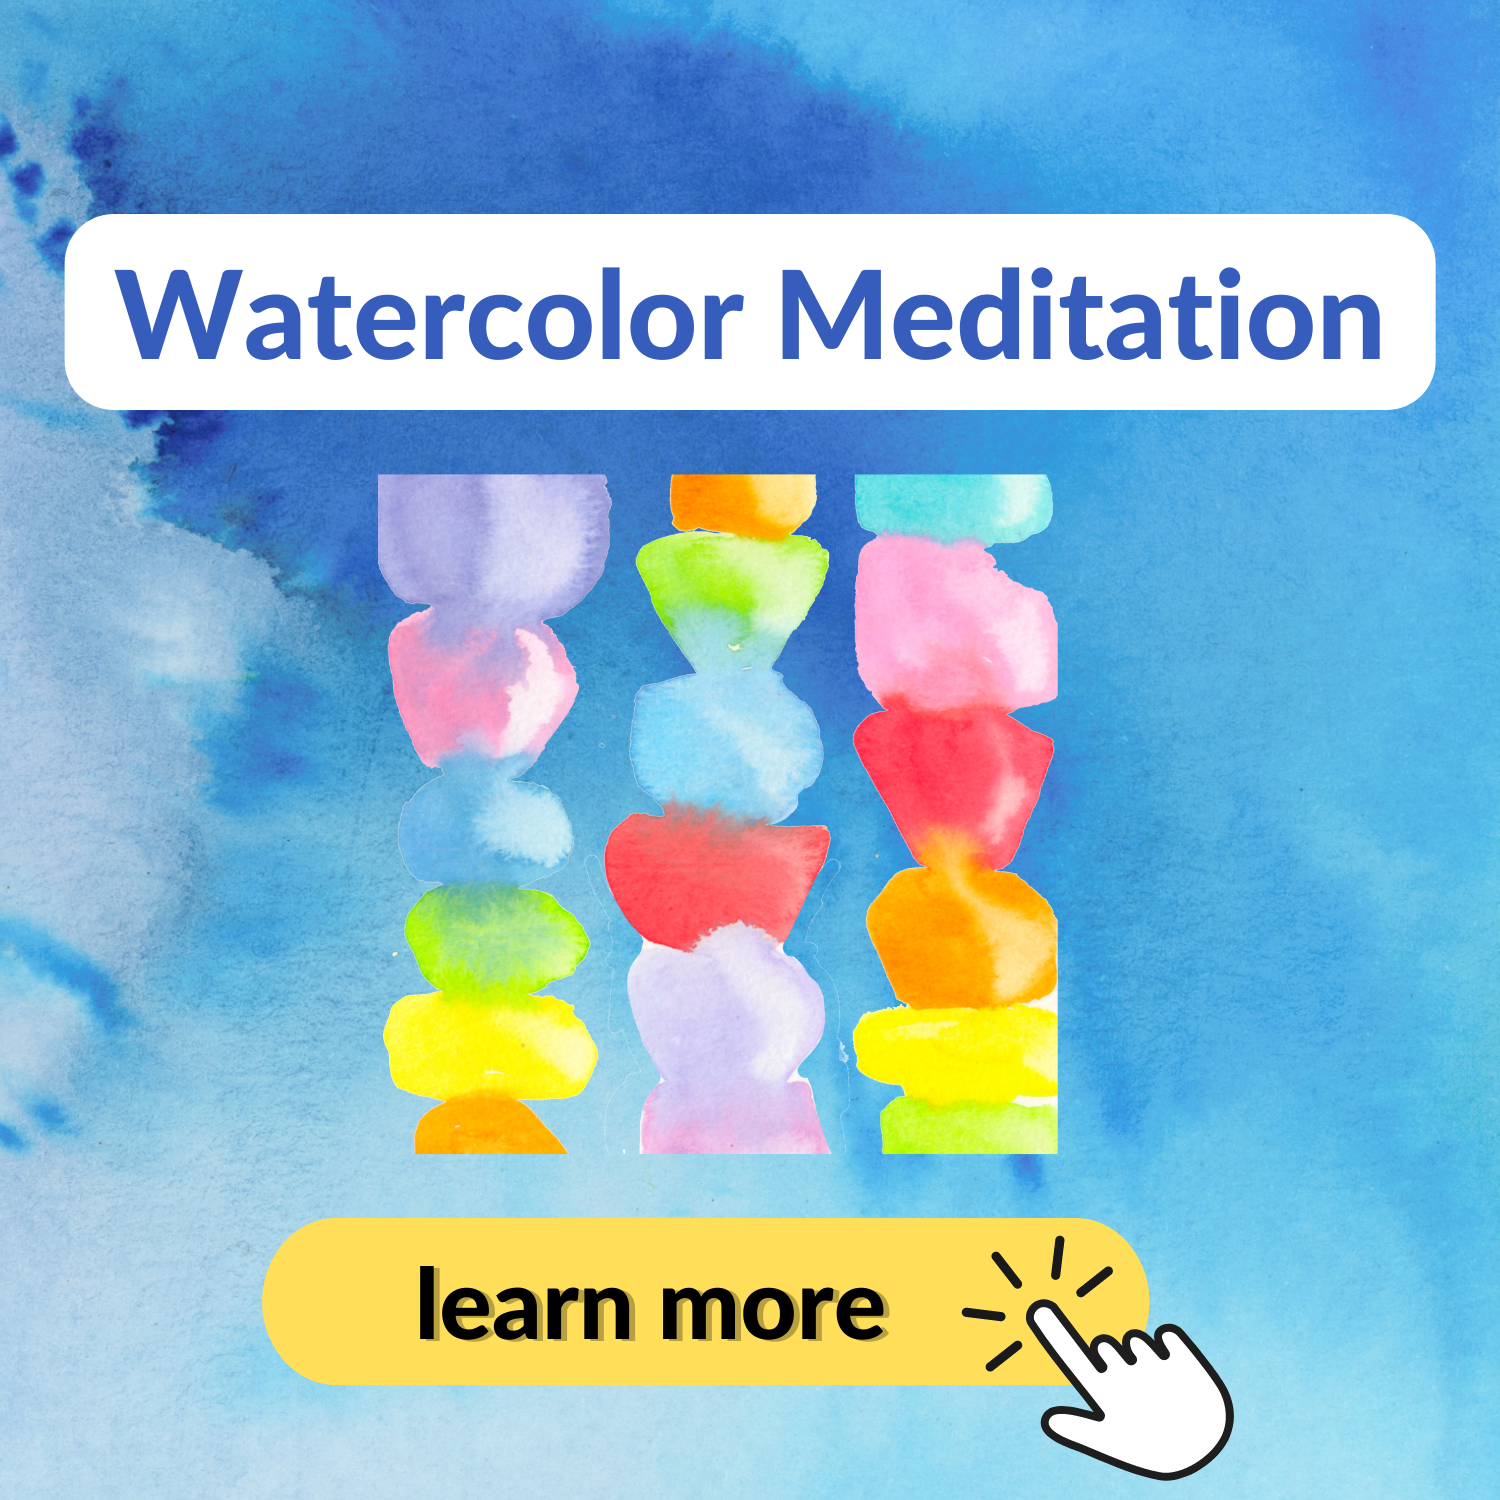 Watercolor Meditation Online Course